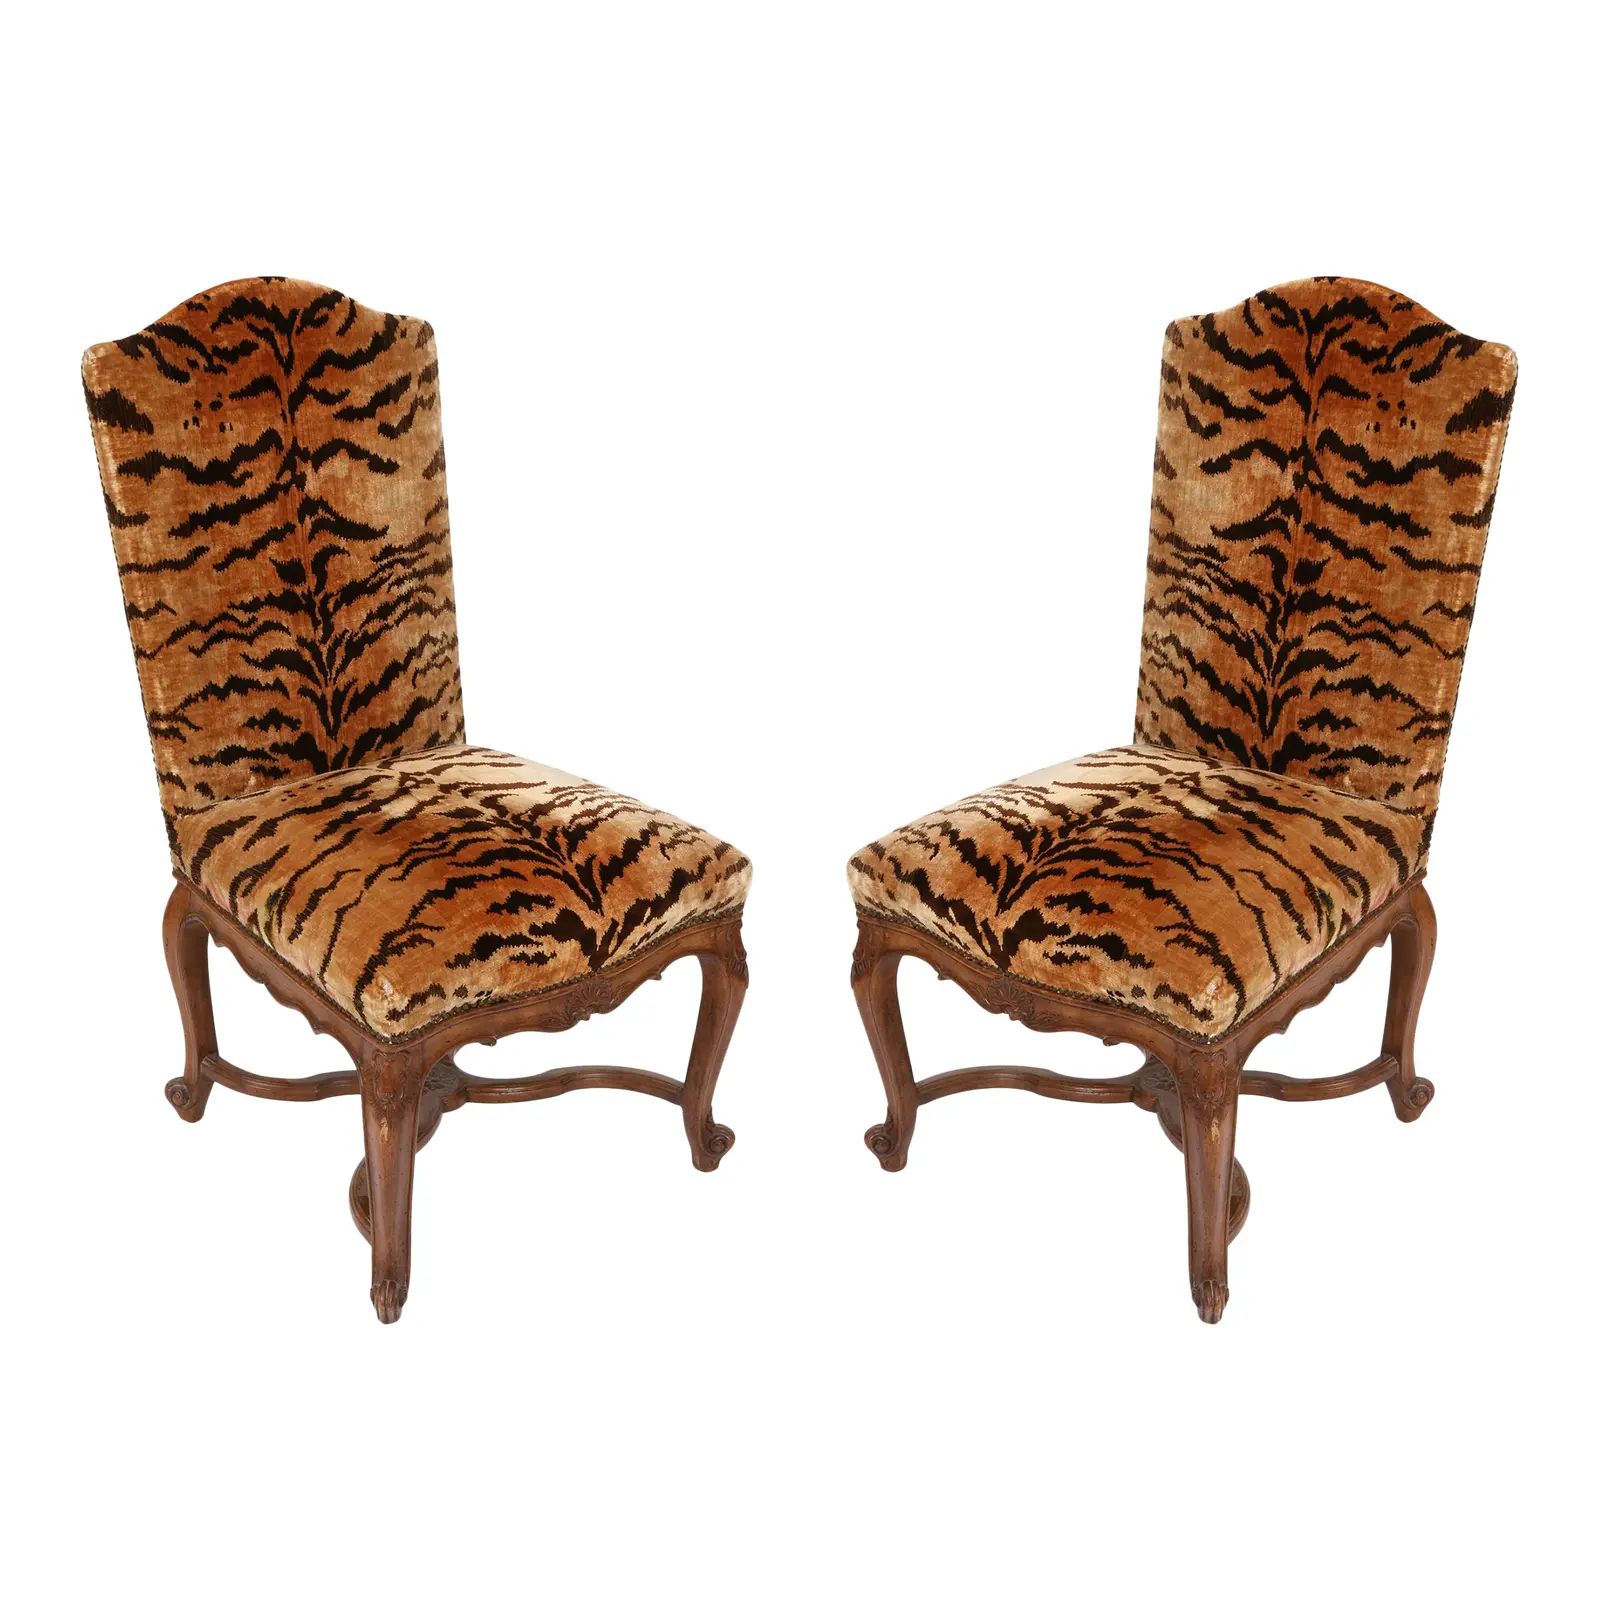 Pair of Vintage Regence Style Walnut Side Chairs in Silk Tiger Velvet | Chairish